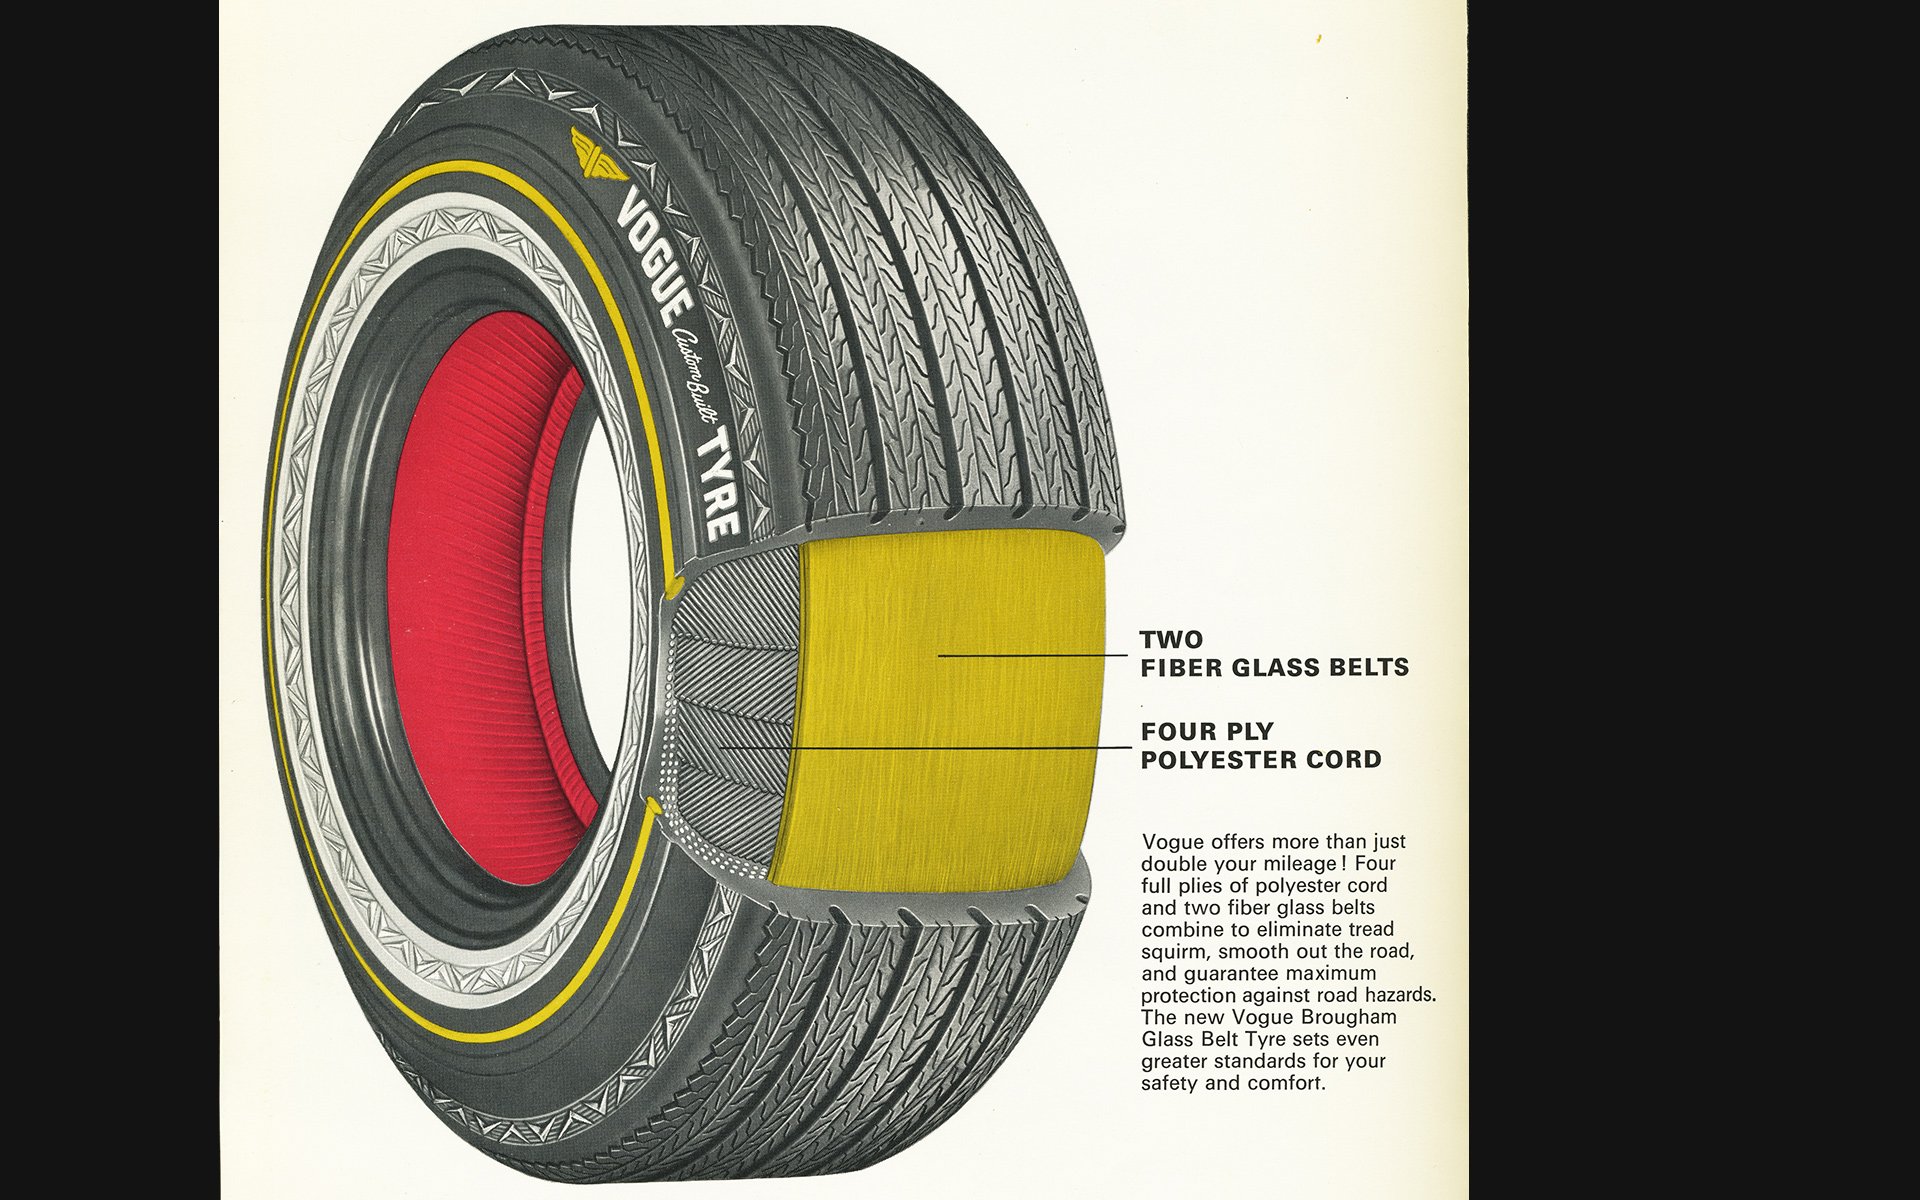 The Vogue Brougham Glass Belt Tyre